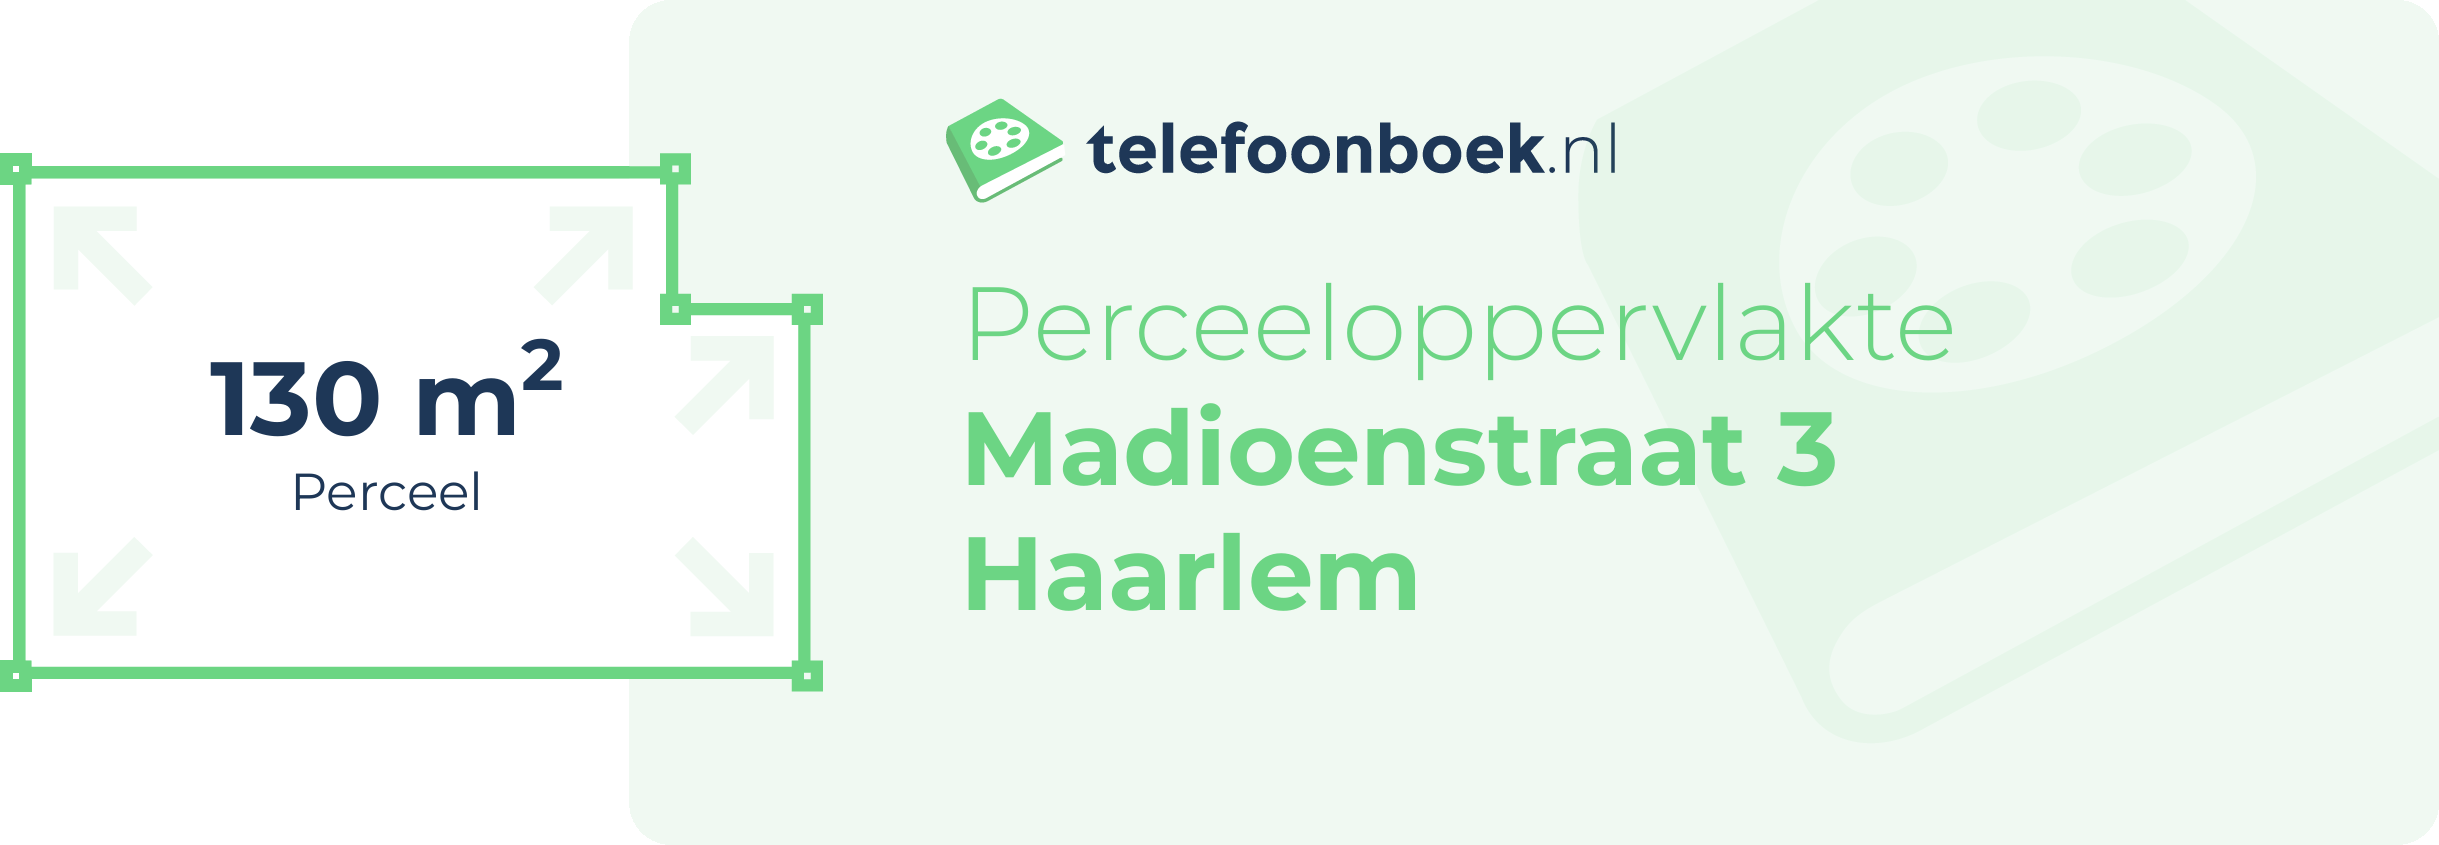 Perceeloppervlakte Madioenstraat 3 Haarlem